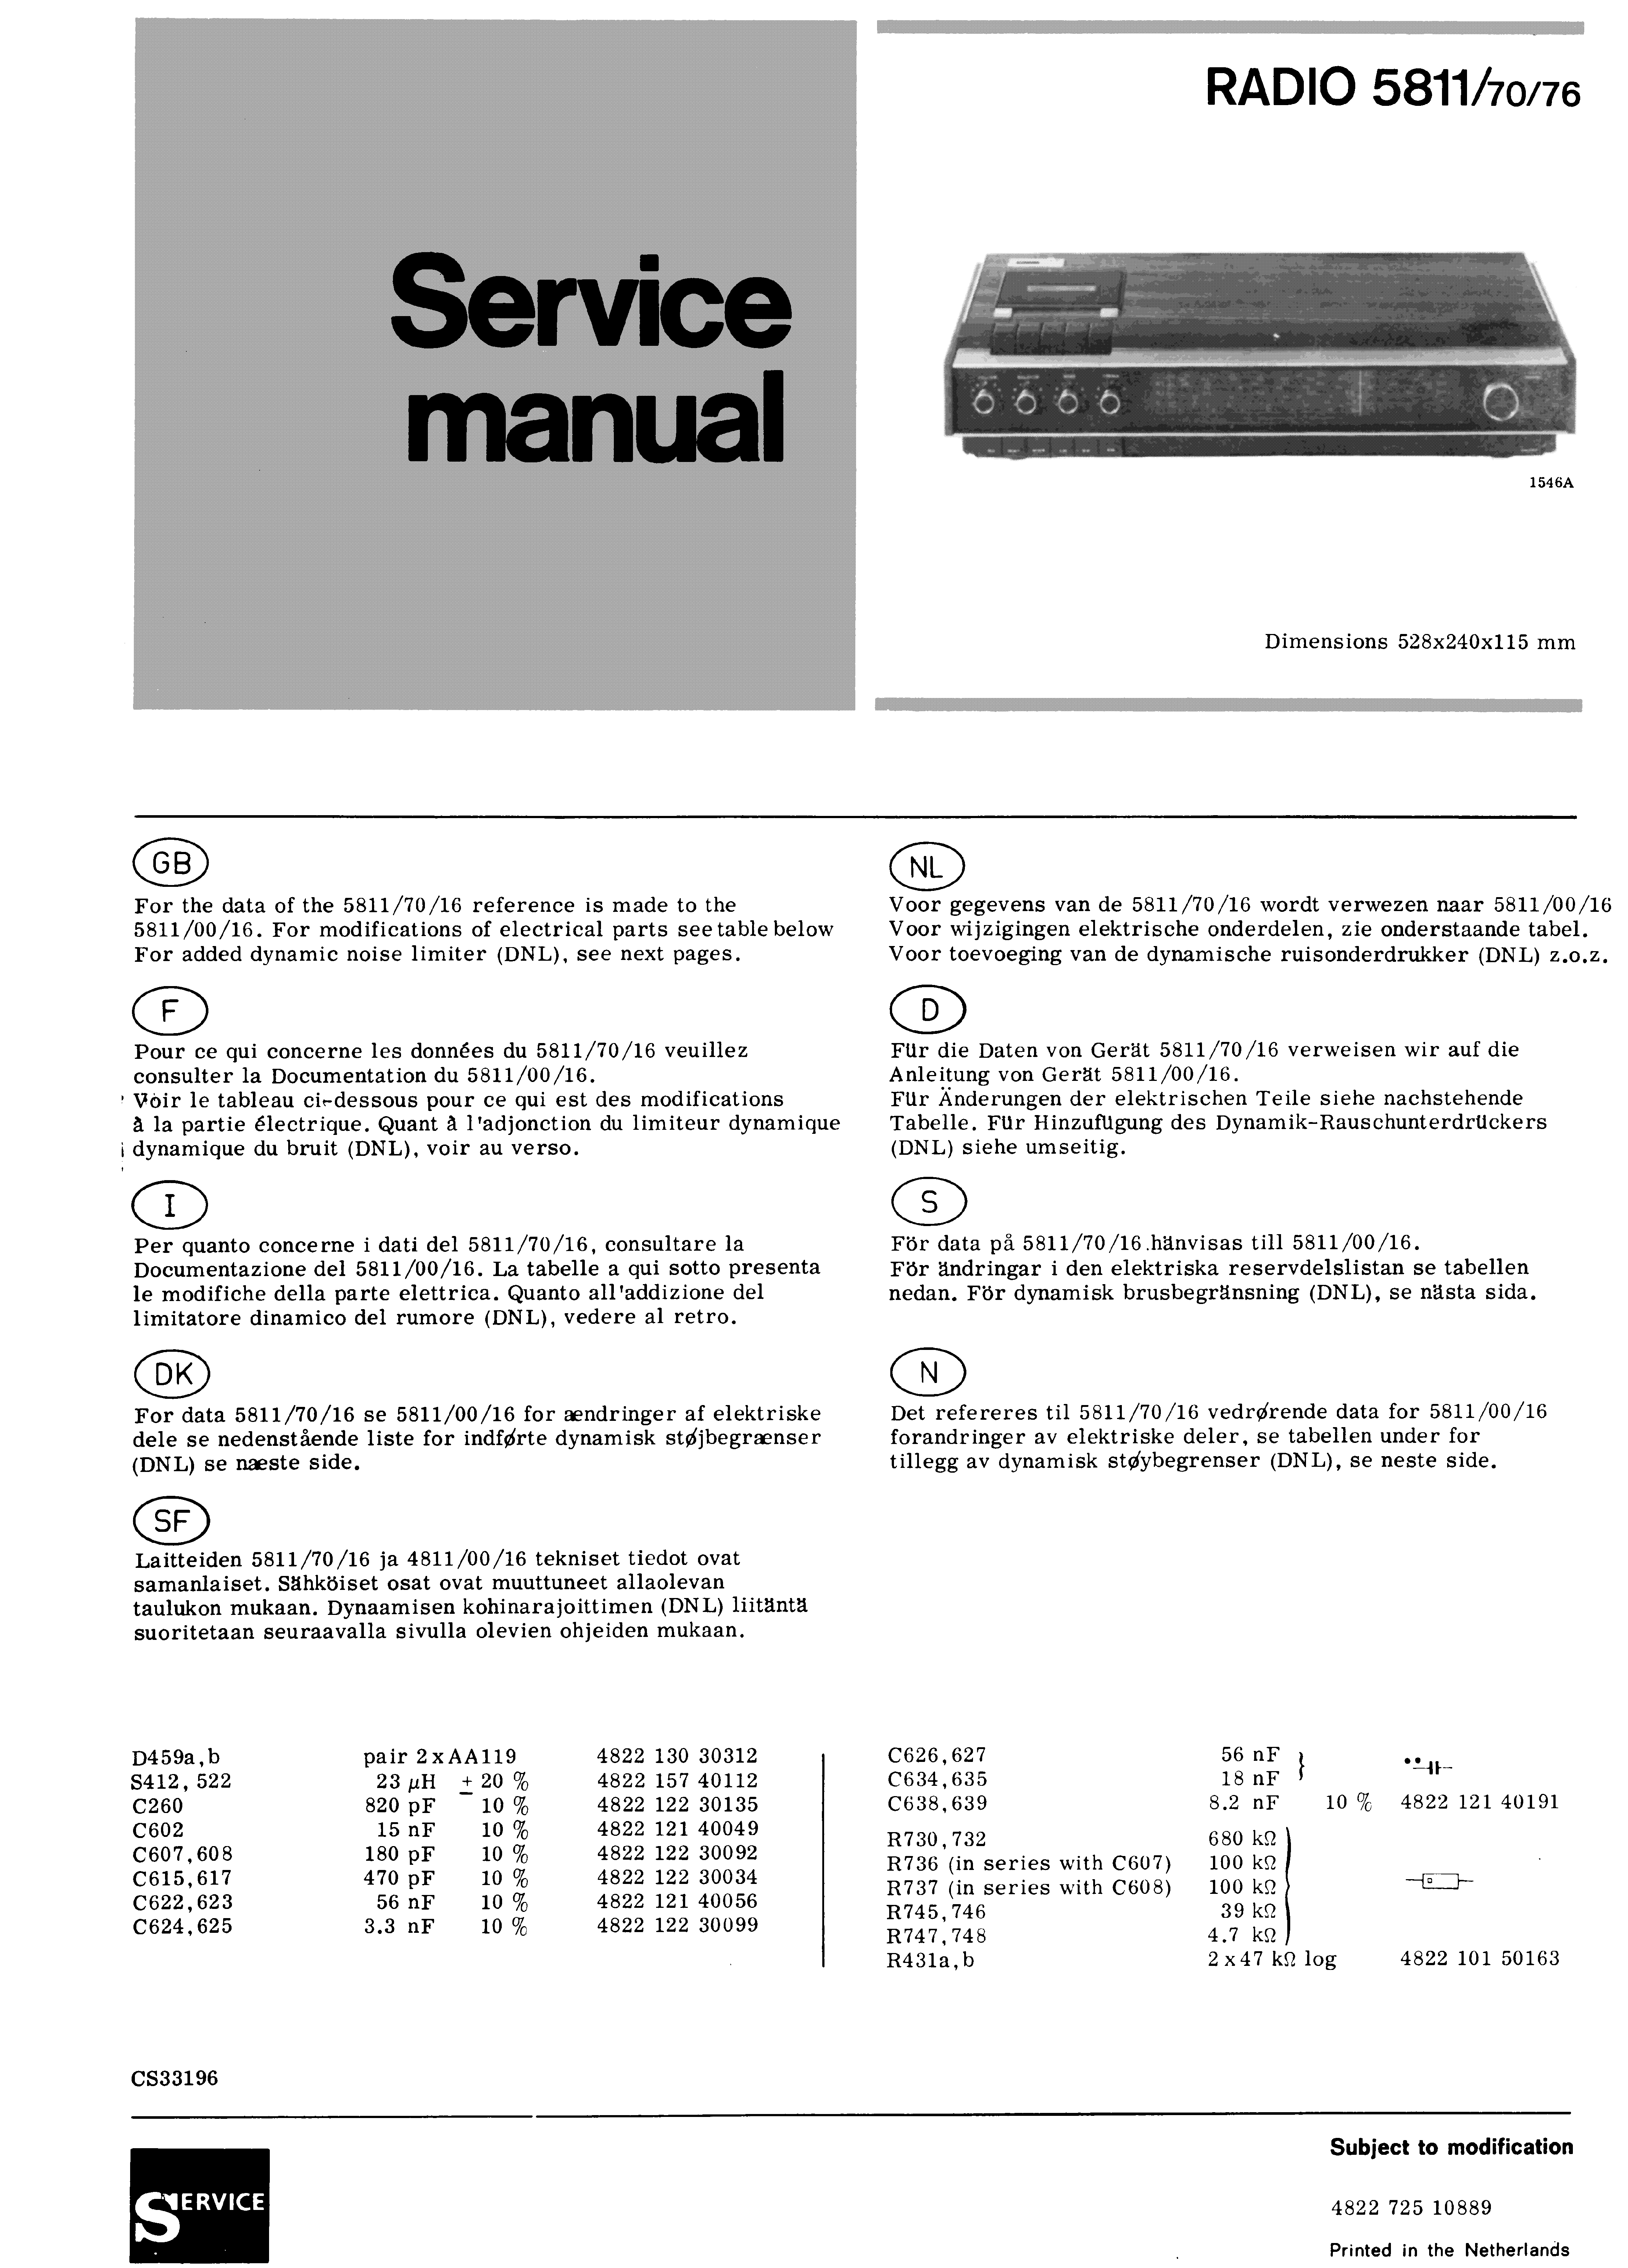 PHILIPS RADIO 5811 SM service manual (1st page)